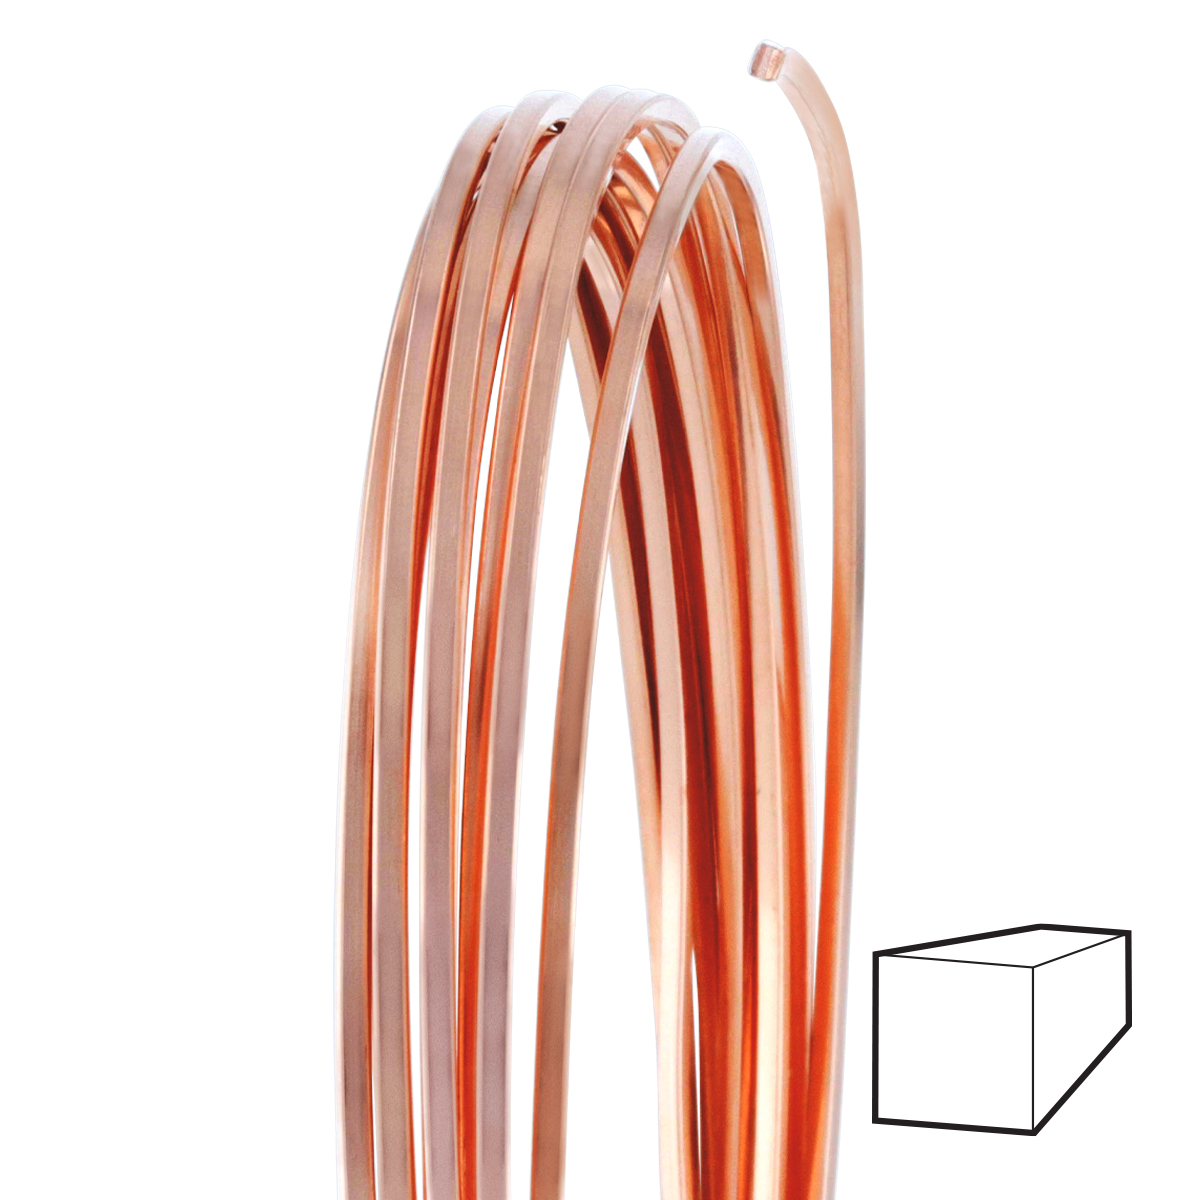 14 Gauge Square Dead Soft Copper Wire: Wire Jewelry, Wire Wrap Tutorials